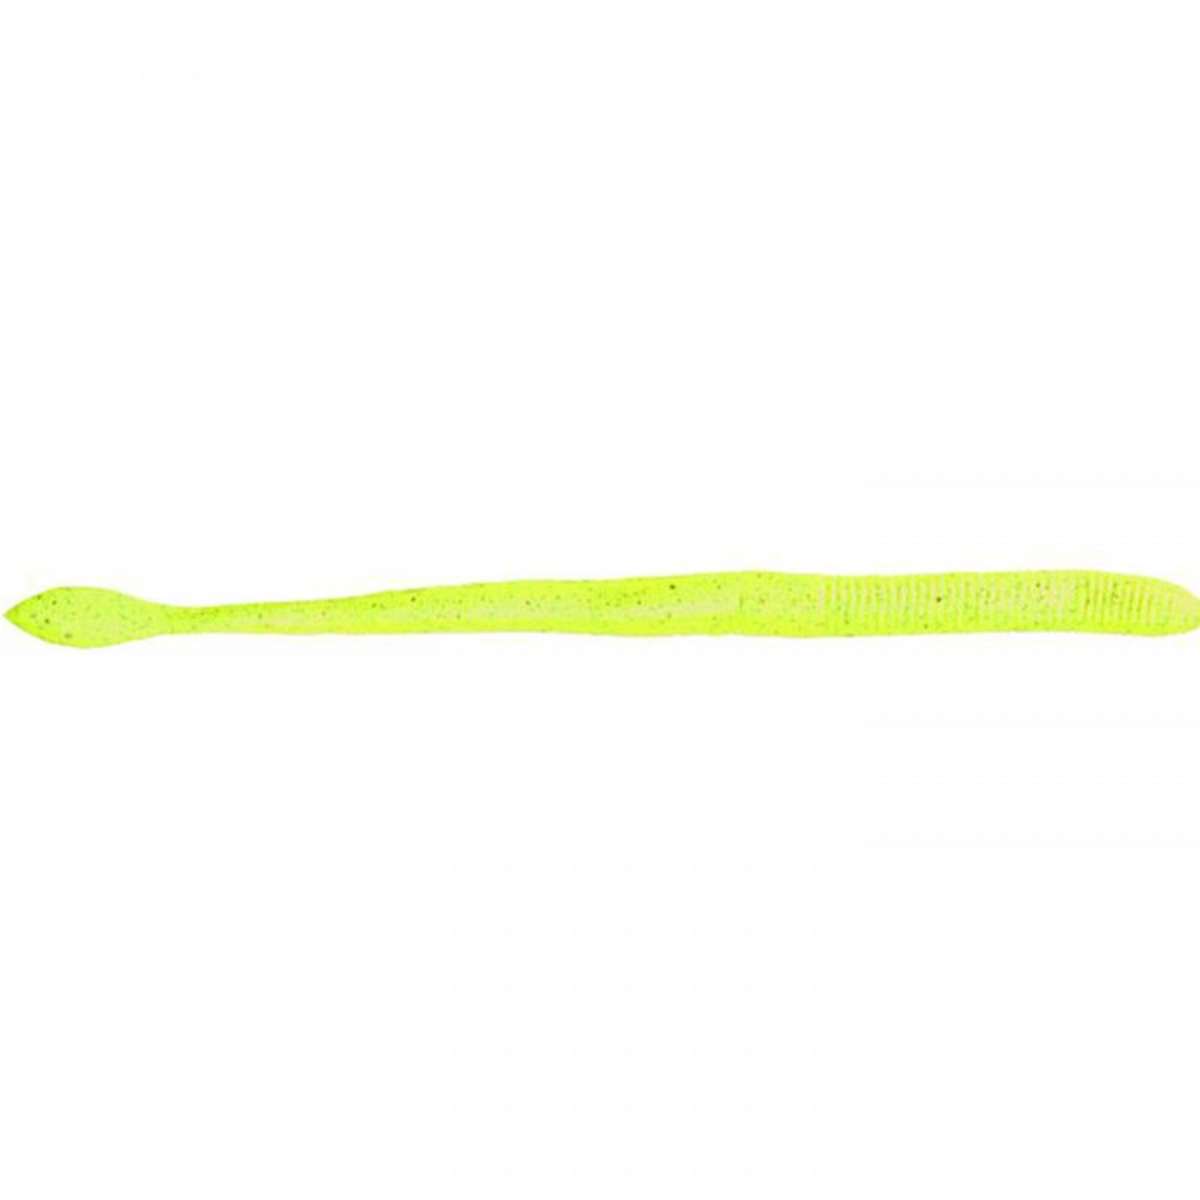 Berkley Gulp! Alive Nightcrawler - 15 cm - Chartreuse